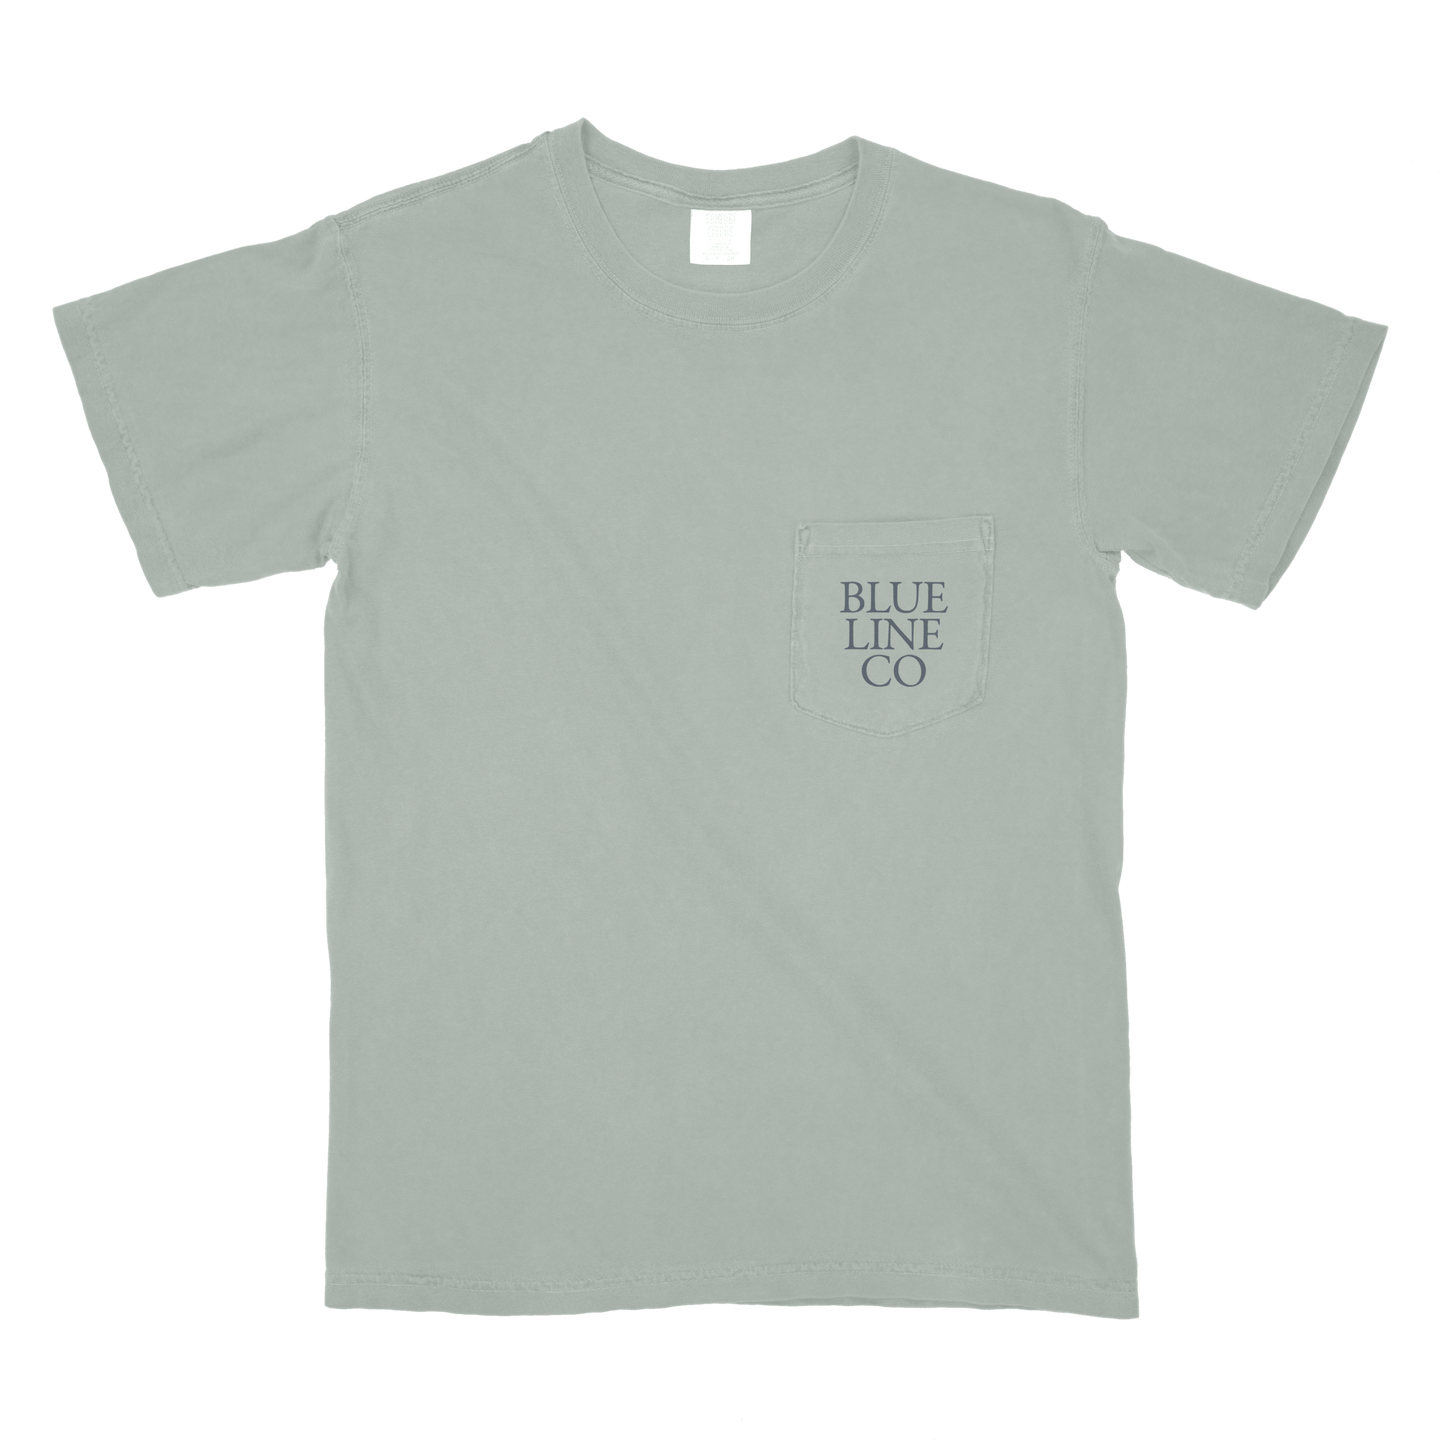 Get Stoned Shirt Bay Green/
Navy Blue